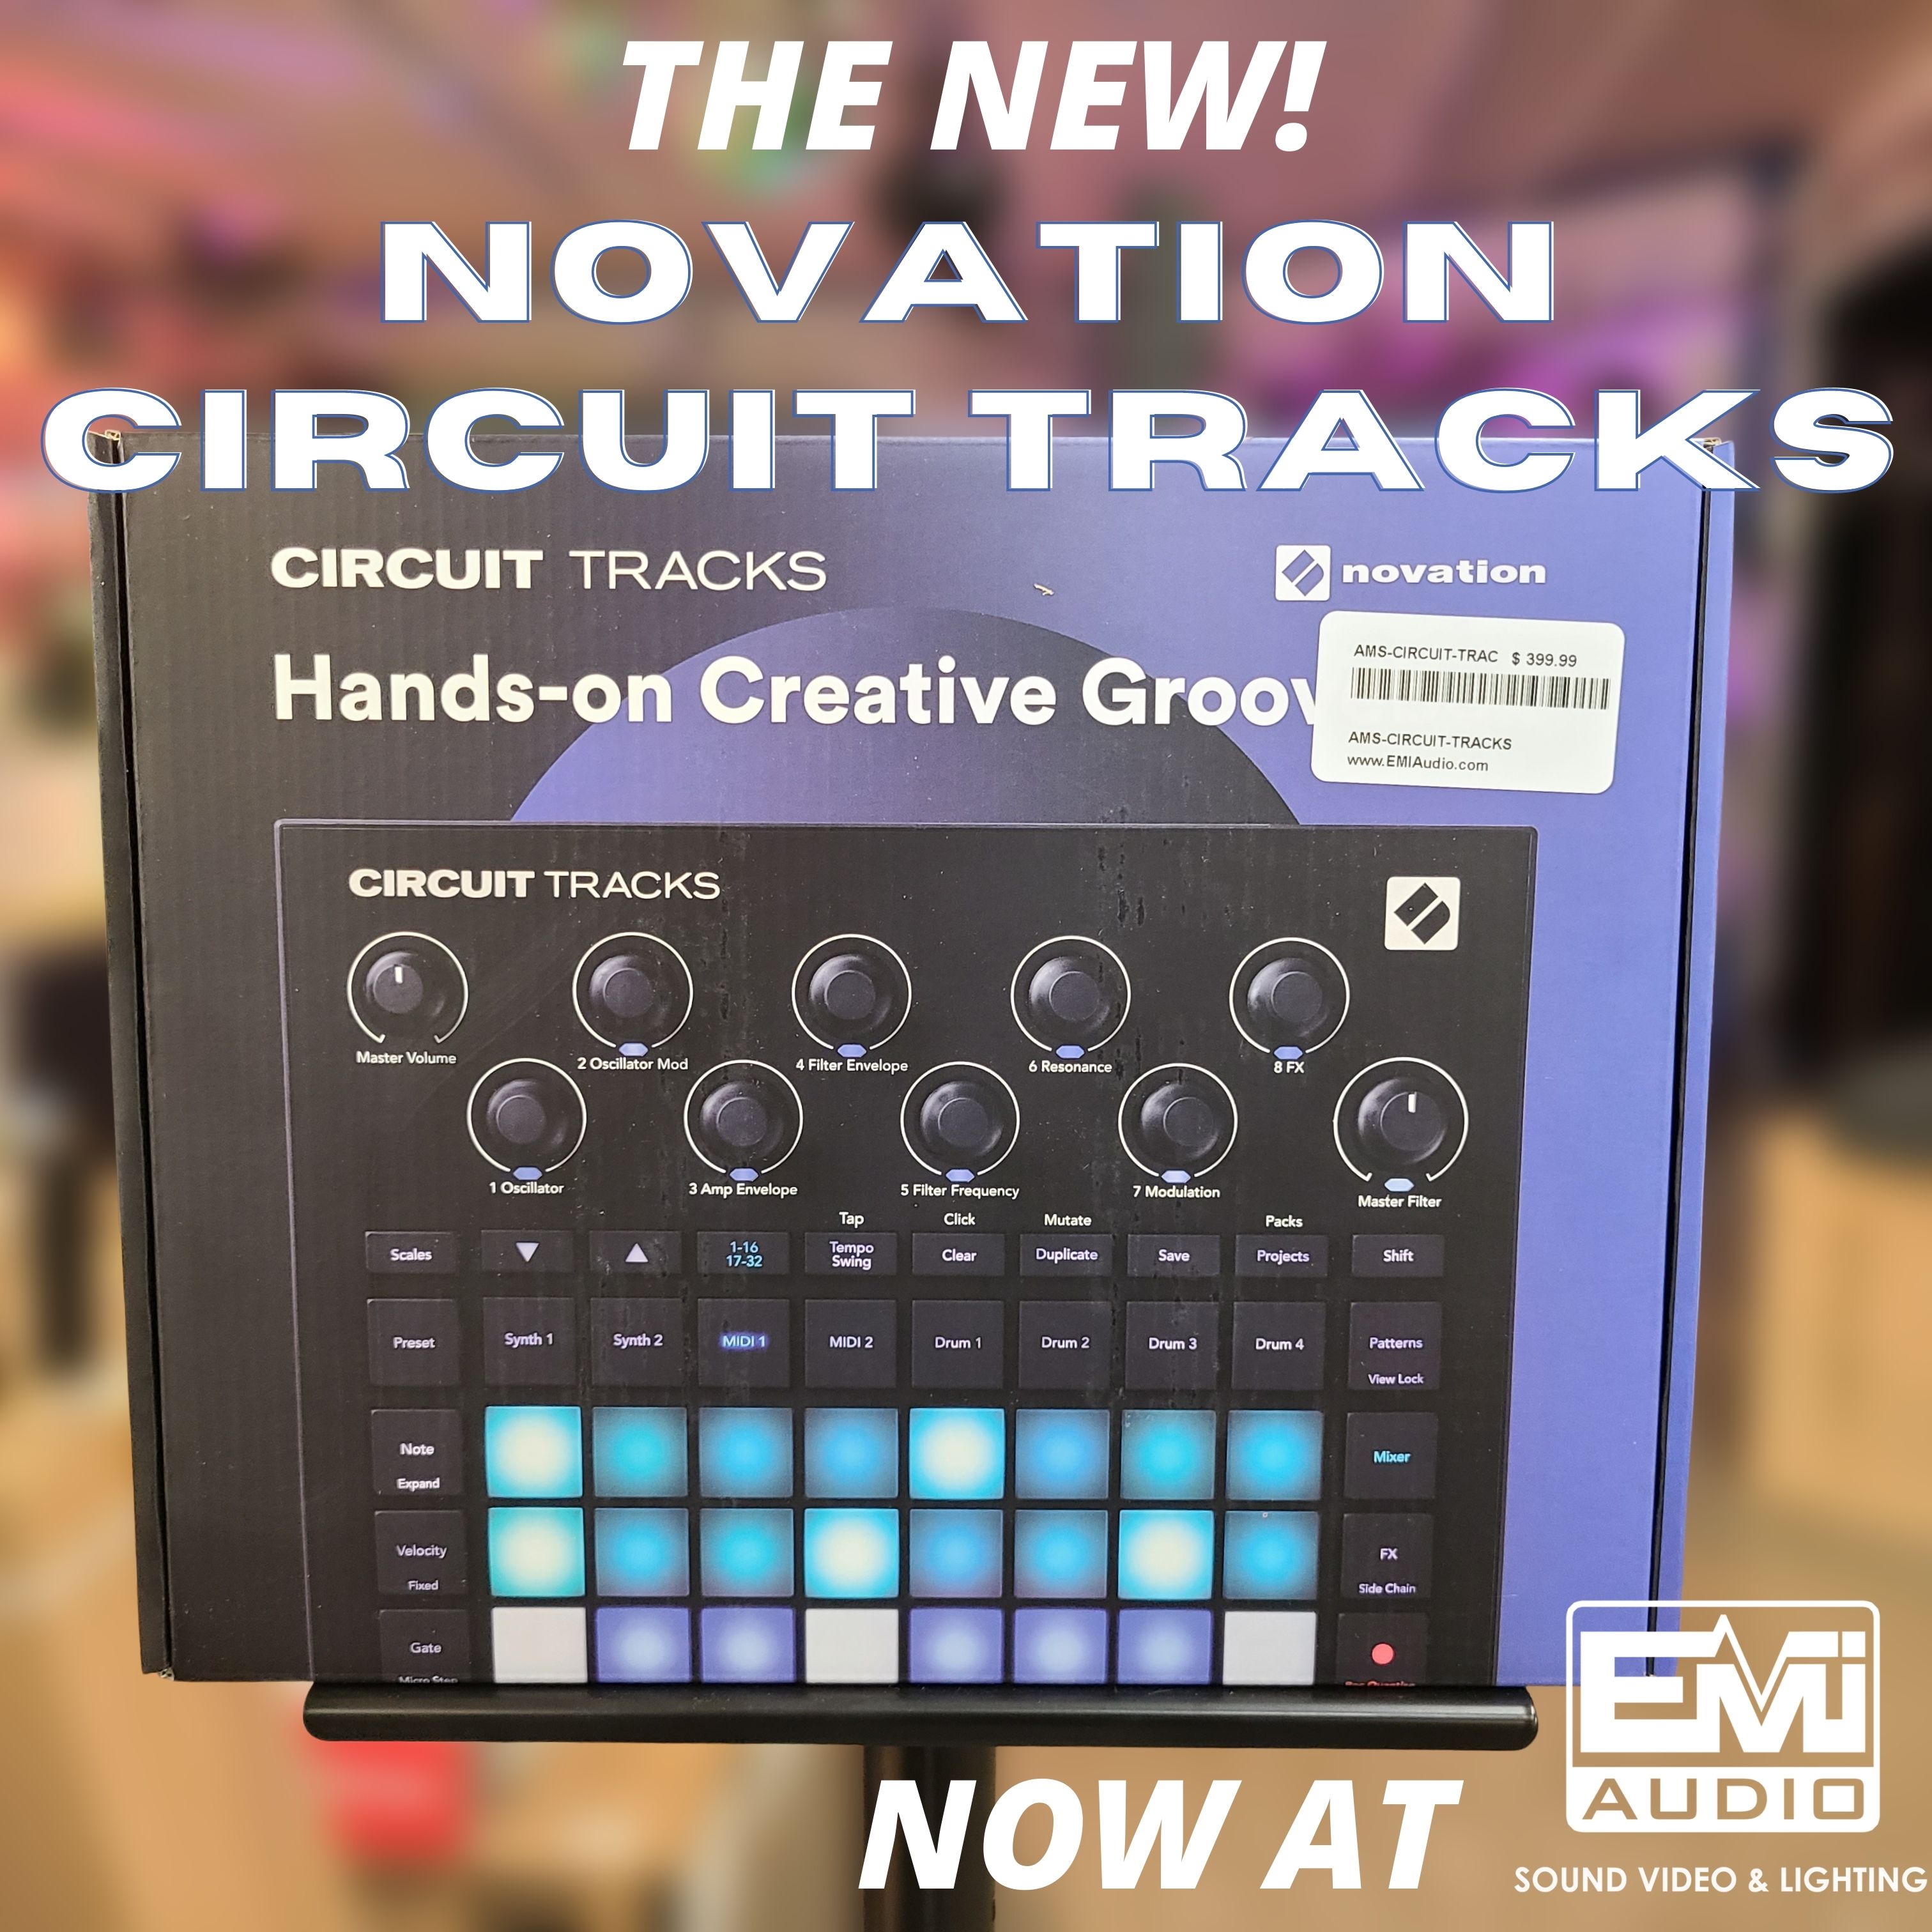 All NEW - Novation Circuit Tracks has landed at EMI Audio! - EMI Audio